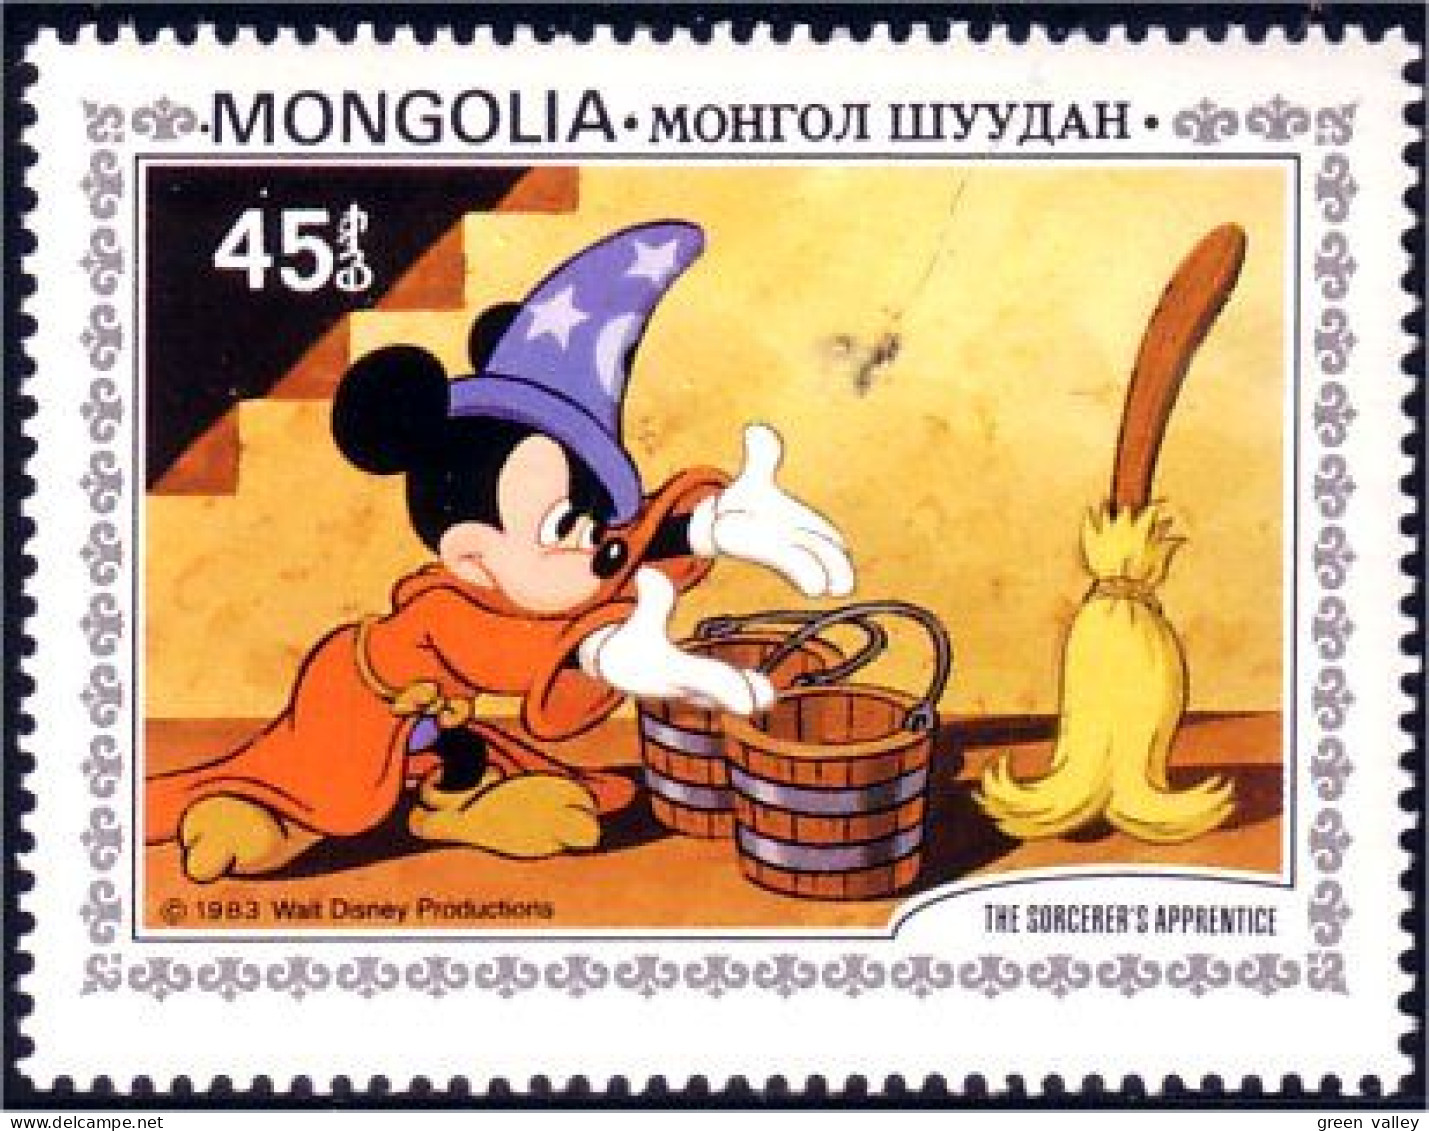 620 Mongolie Disney Sorcerer Apprentice Sorcier Hat Chapeau Balai Broom Seaux Buckets MNH ** Neuf SC (MNG-41a) - Mongolei